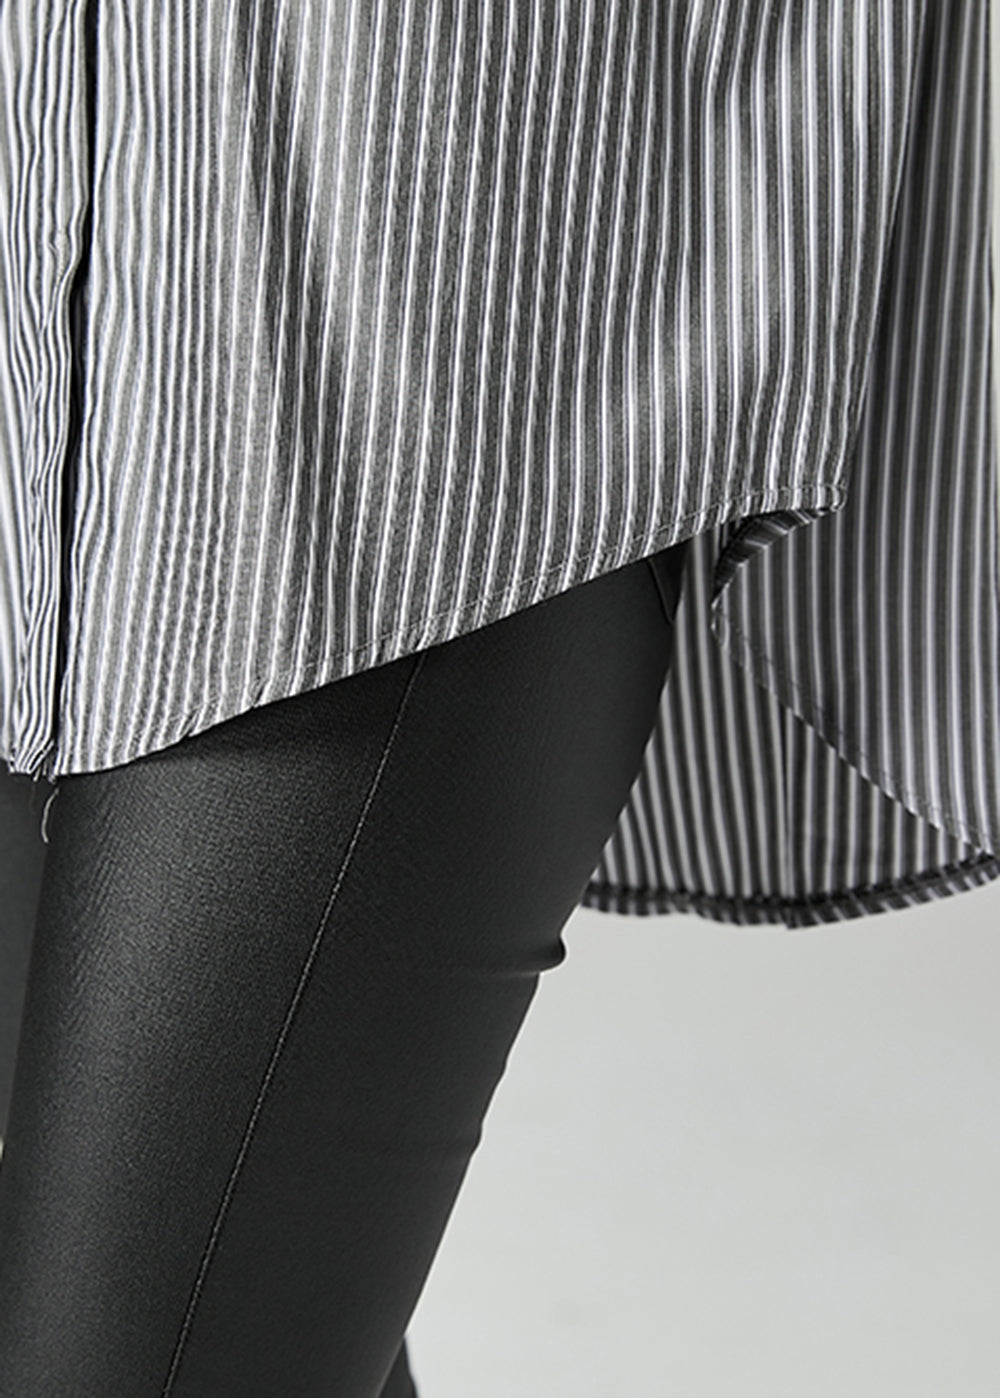 French Grey Peter Pan Collar Striped Pockets Cotton Shirt Spring